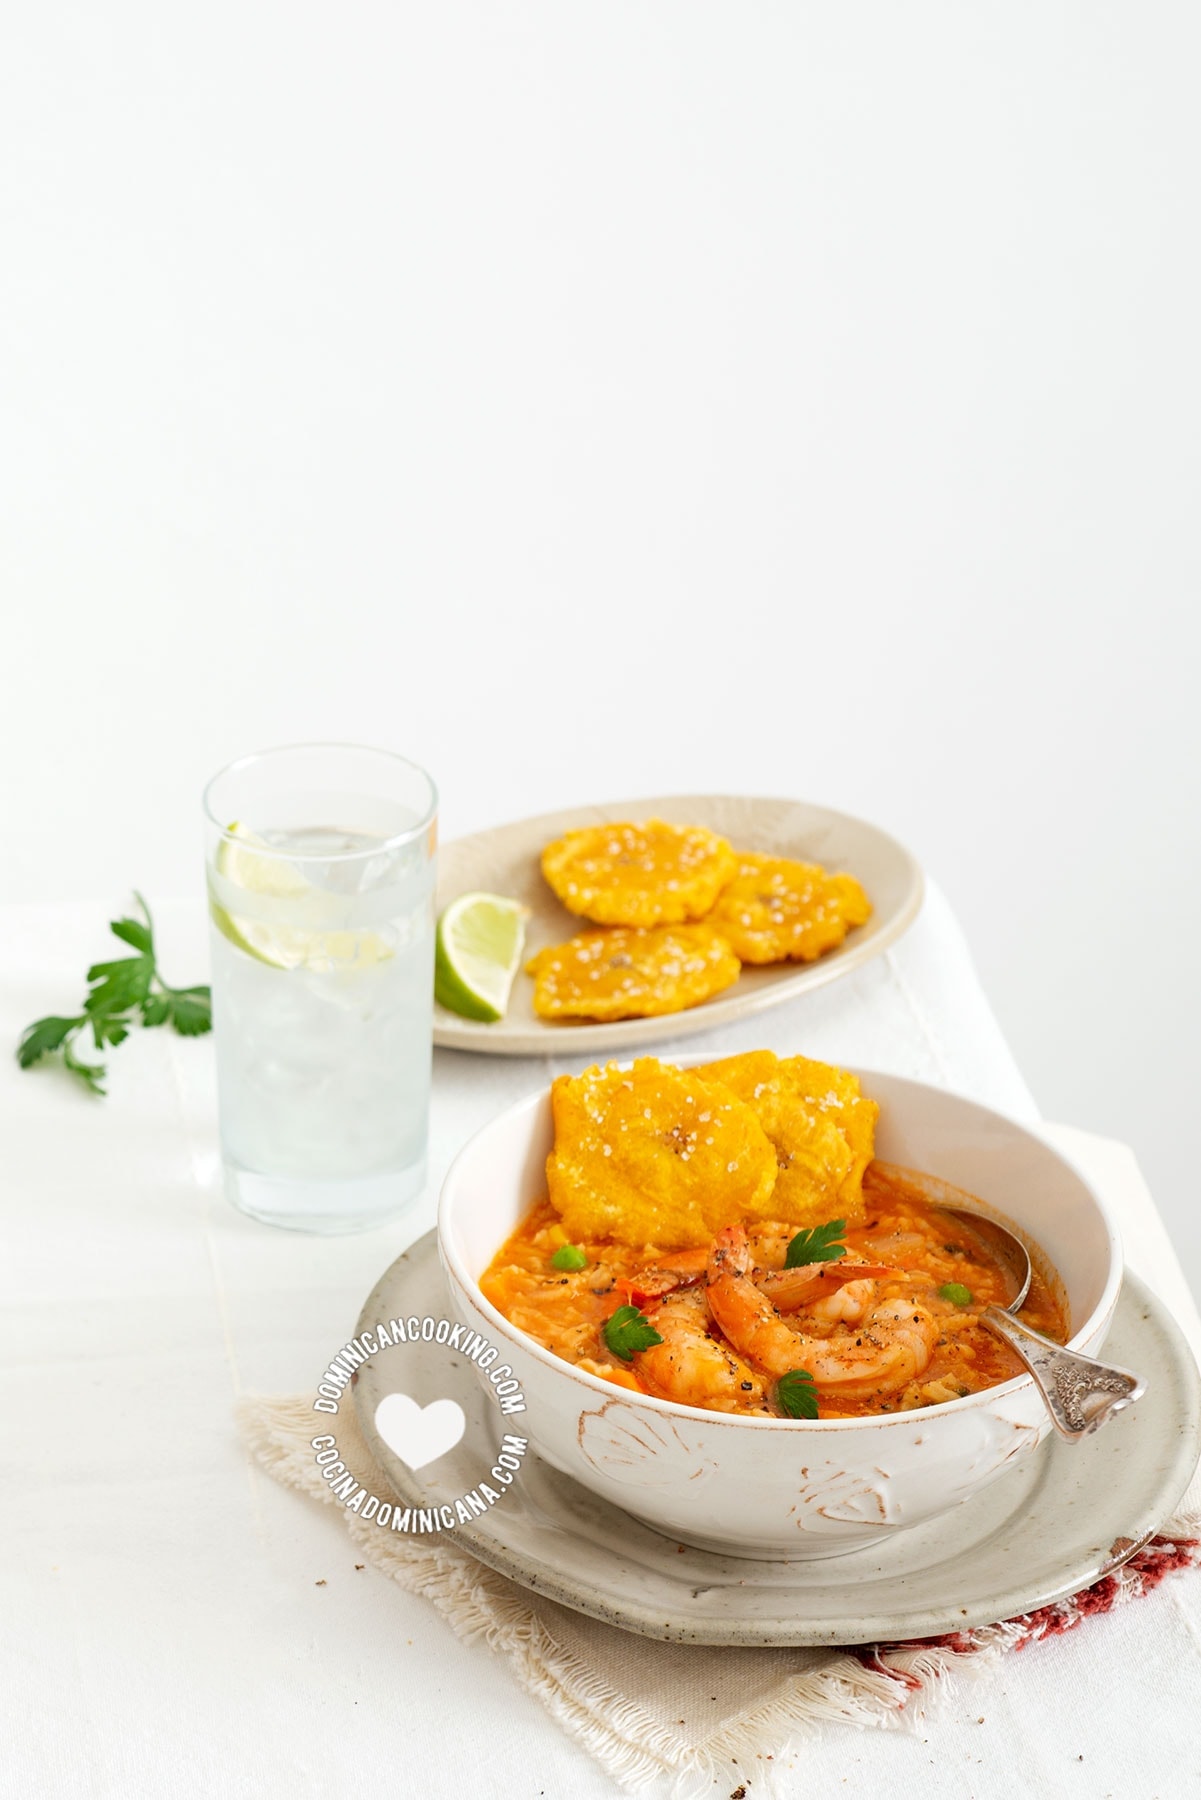 Asopao de Camarones (Shrimp and Rice Pottage)